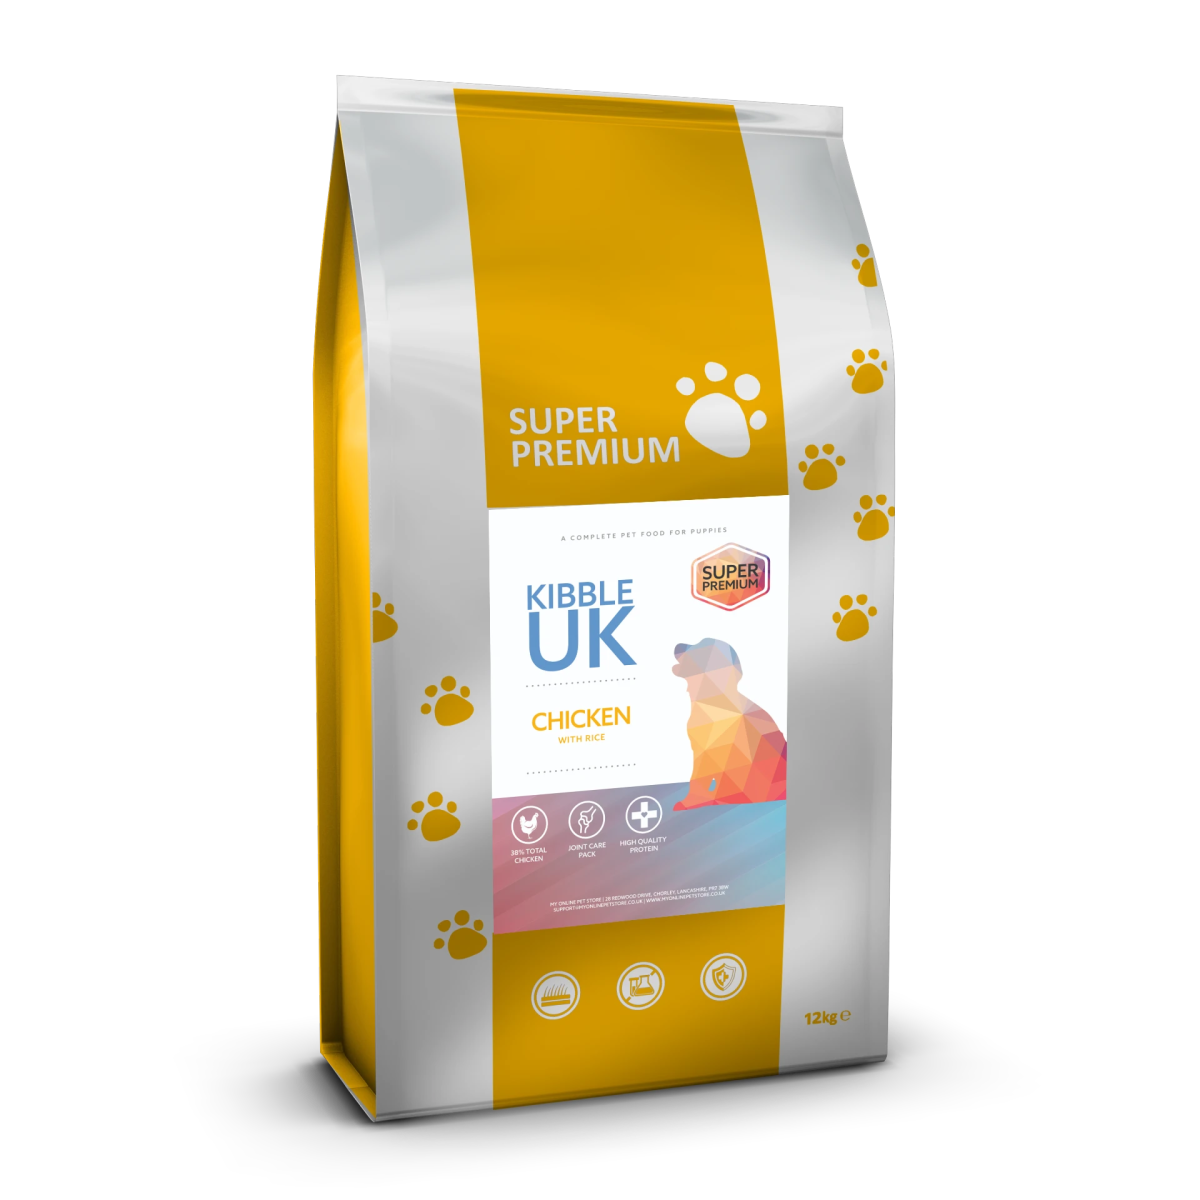 Super Premium Puppy Food - Chicken with Rice - Kibble UK - My Online Pet Store